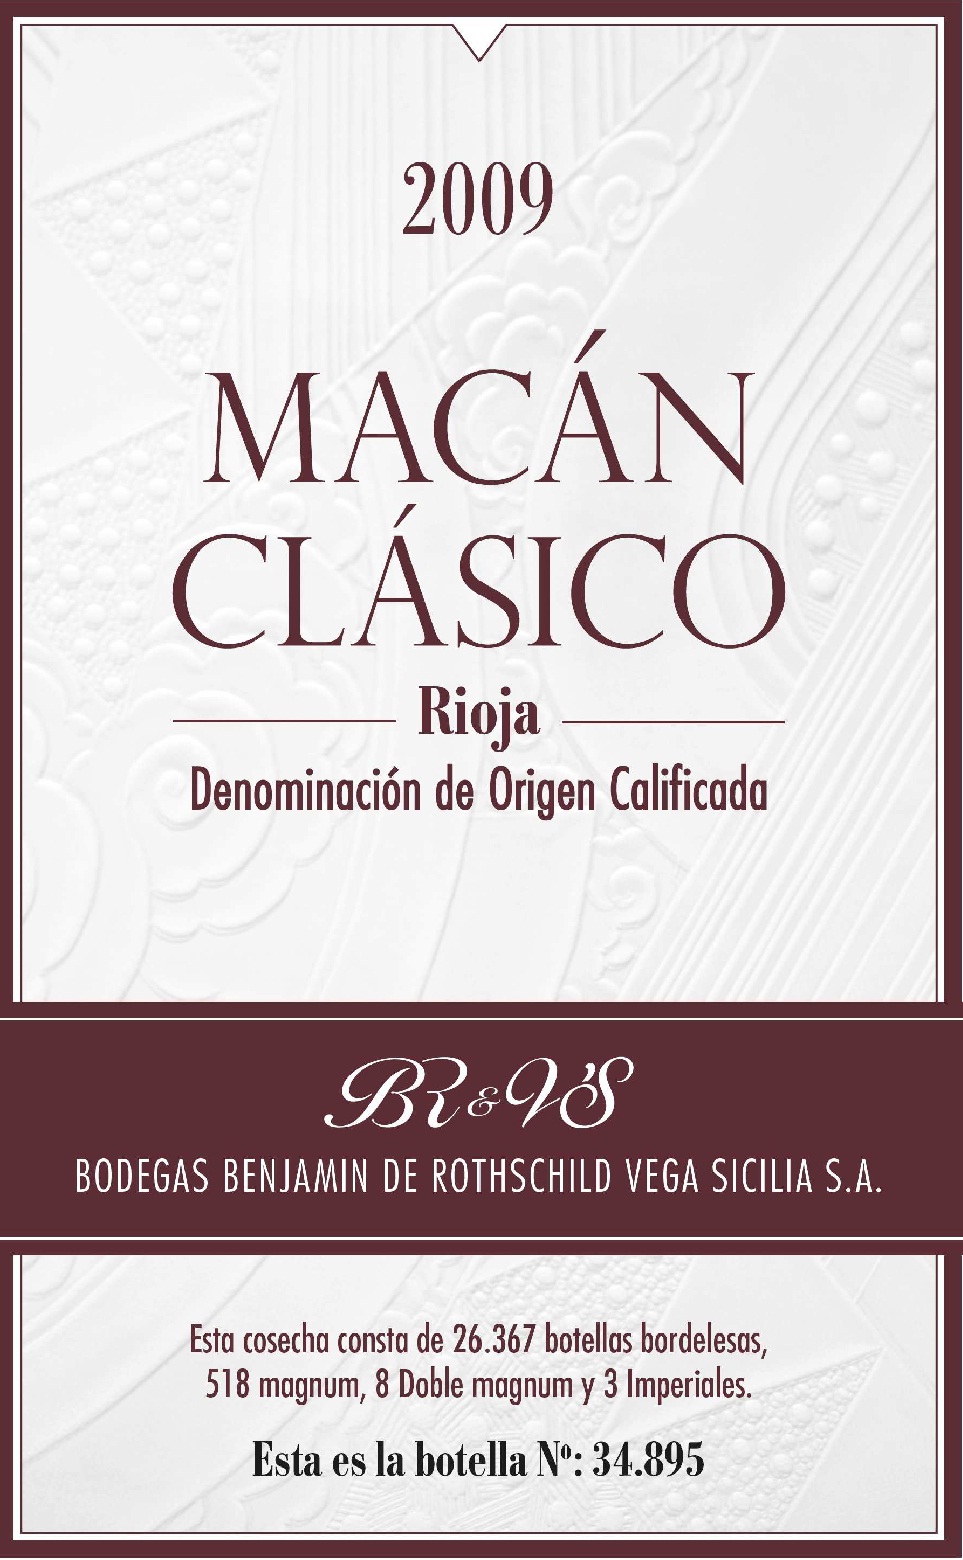 Macan - Rioja Clasico 2019 (750ml)